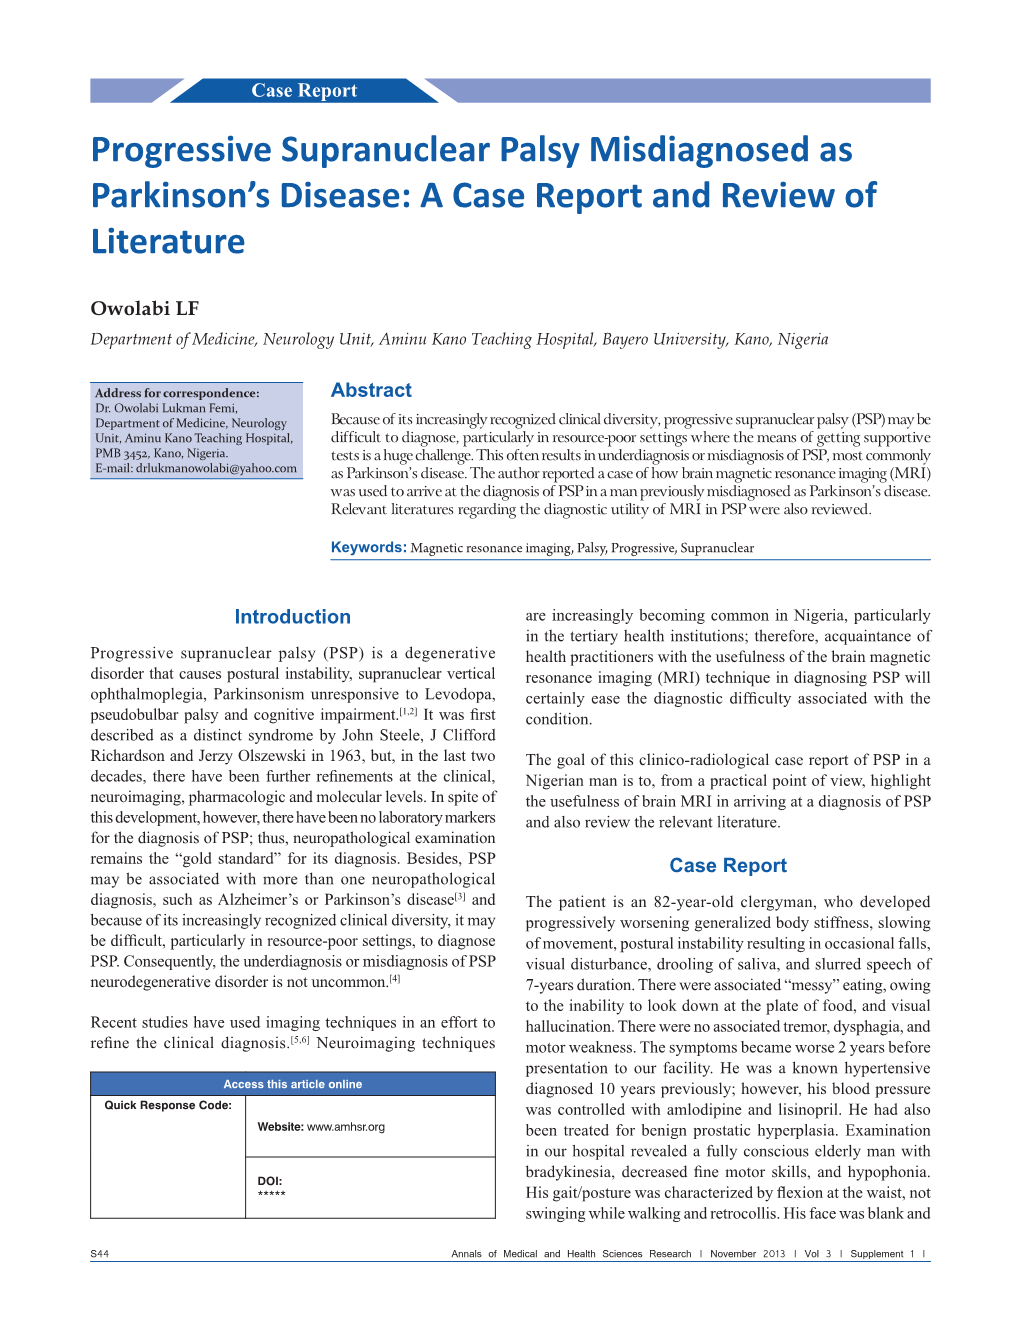 Progressive Supranuclear Palsy Misdiagnosed As Parkinson's